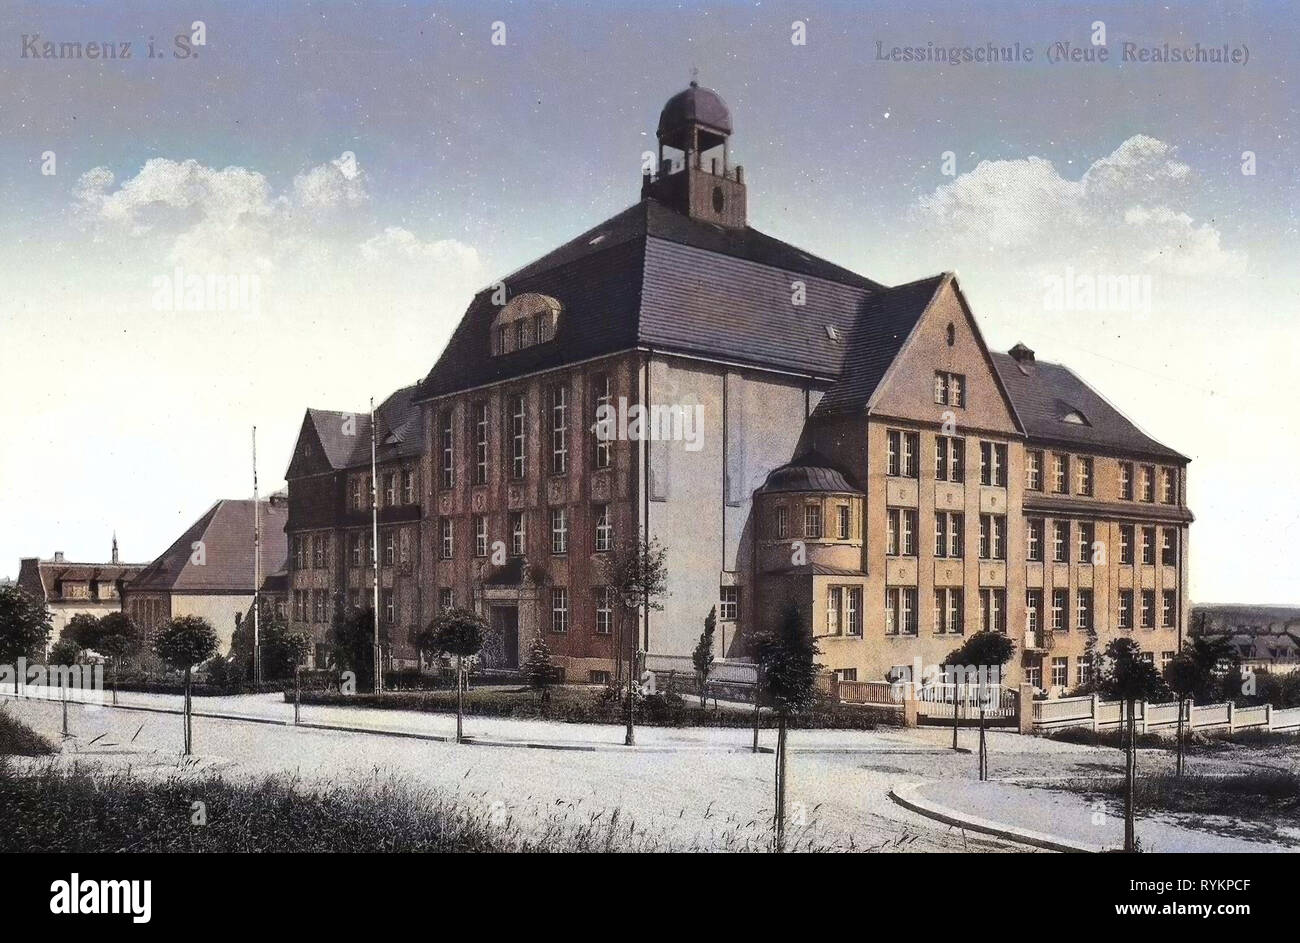 1913, Landkreis Bautzen, Kamenz, Lessingschule, Germany Stock Photo